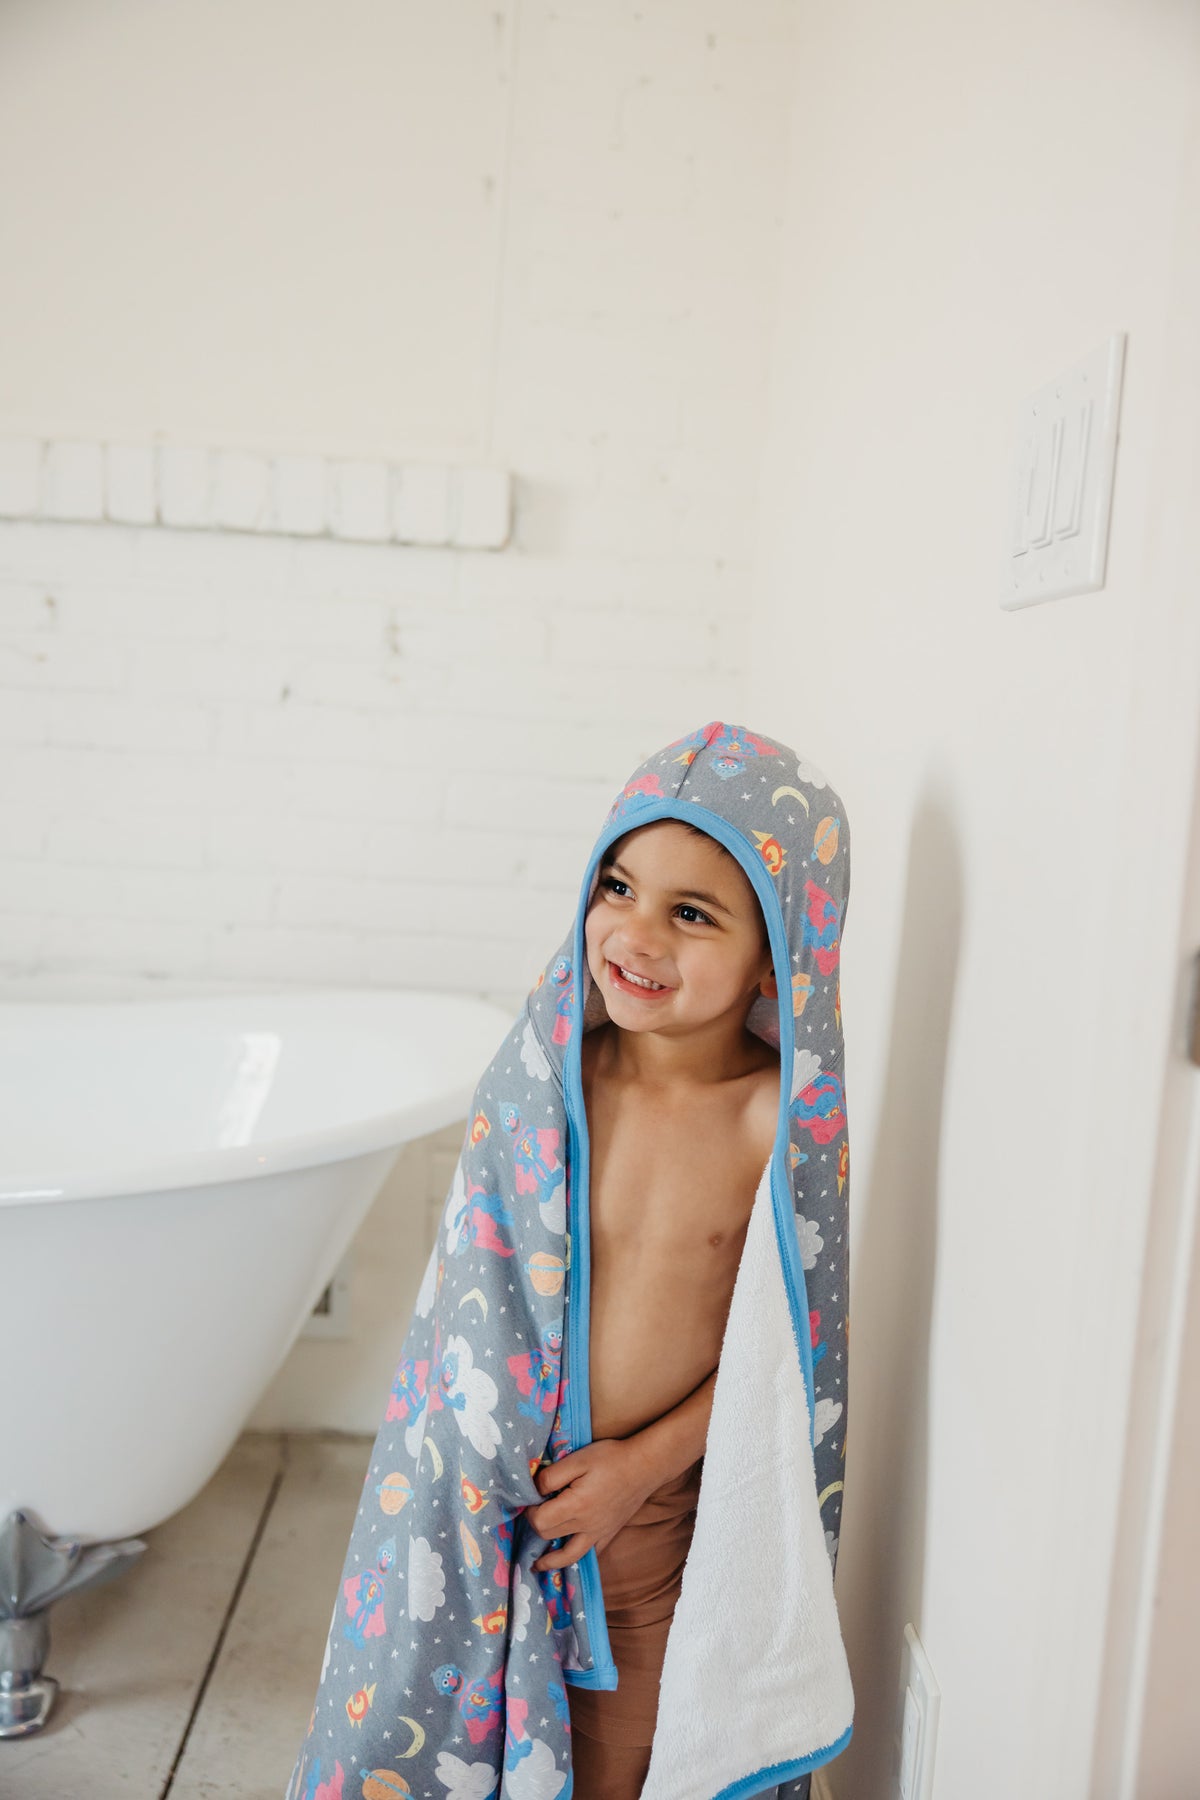 Premium Big Kid Hooded Towel - Super Grover